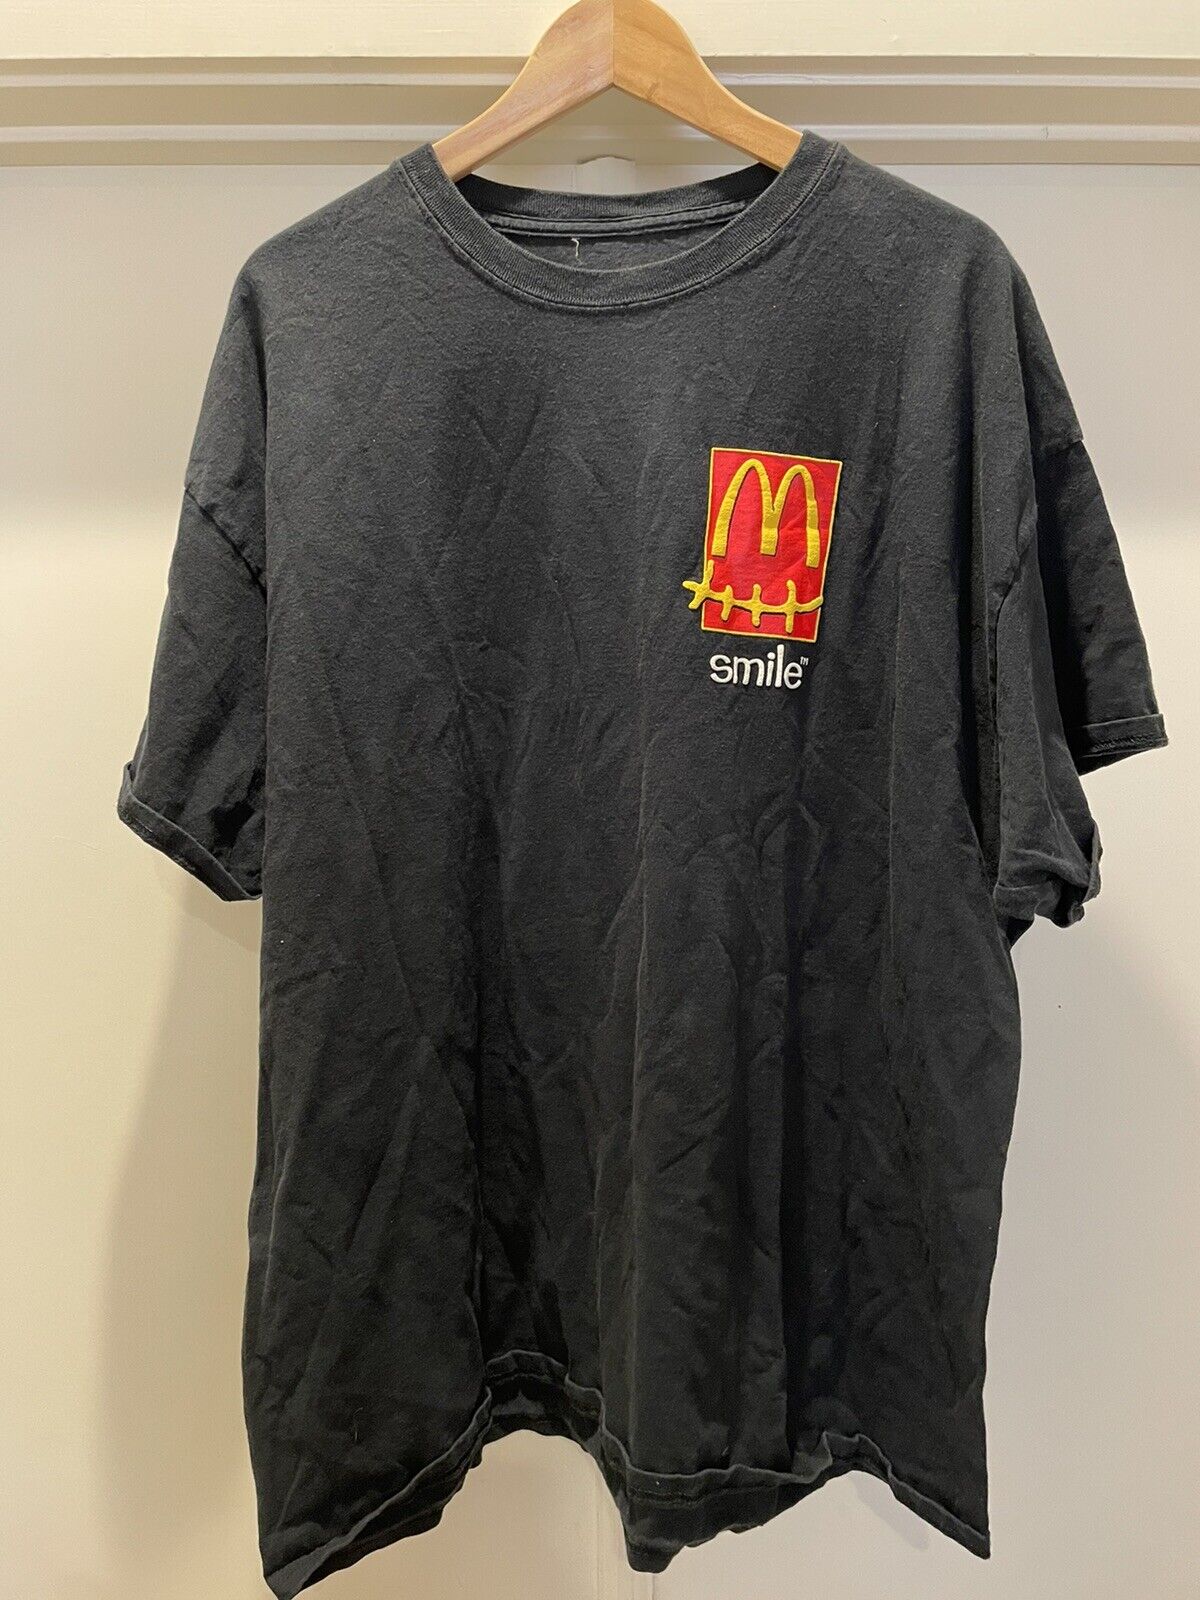 Travis Scott x McDonalds Cactus Jack Smile T Shirt XL Extra Large